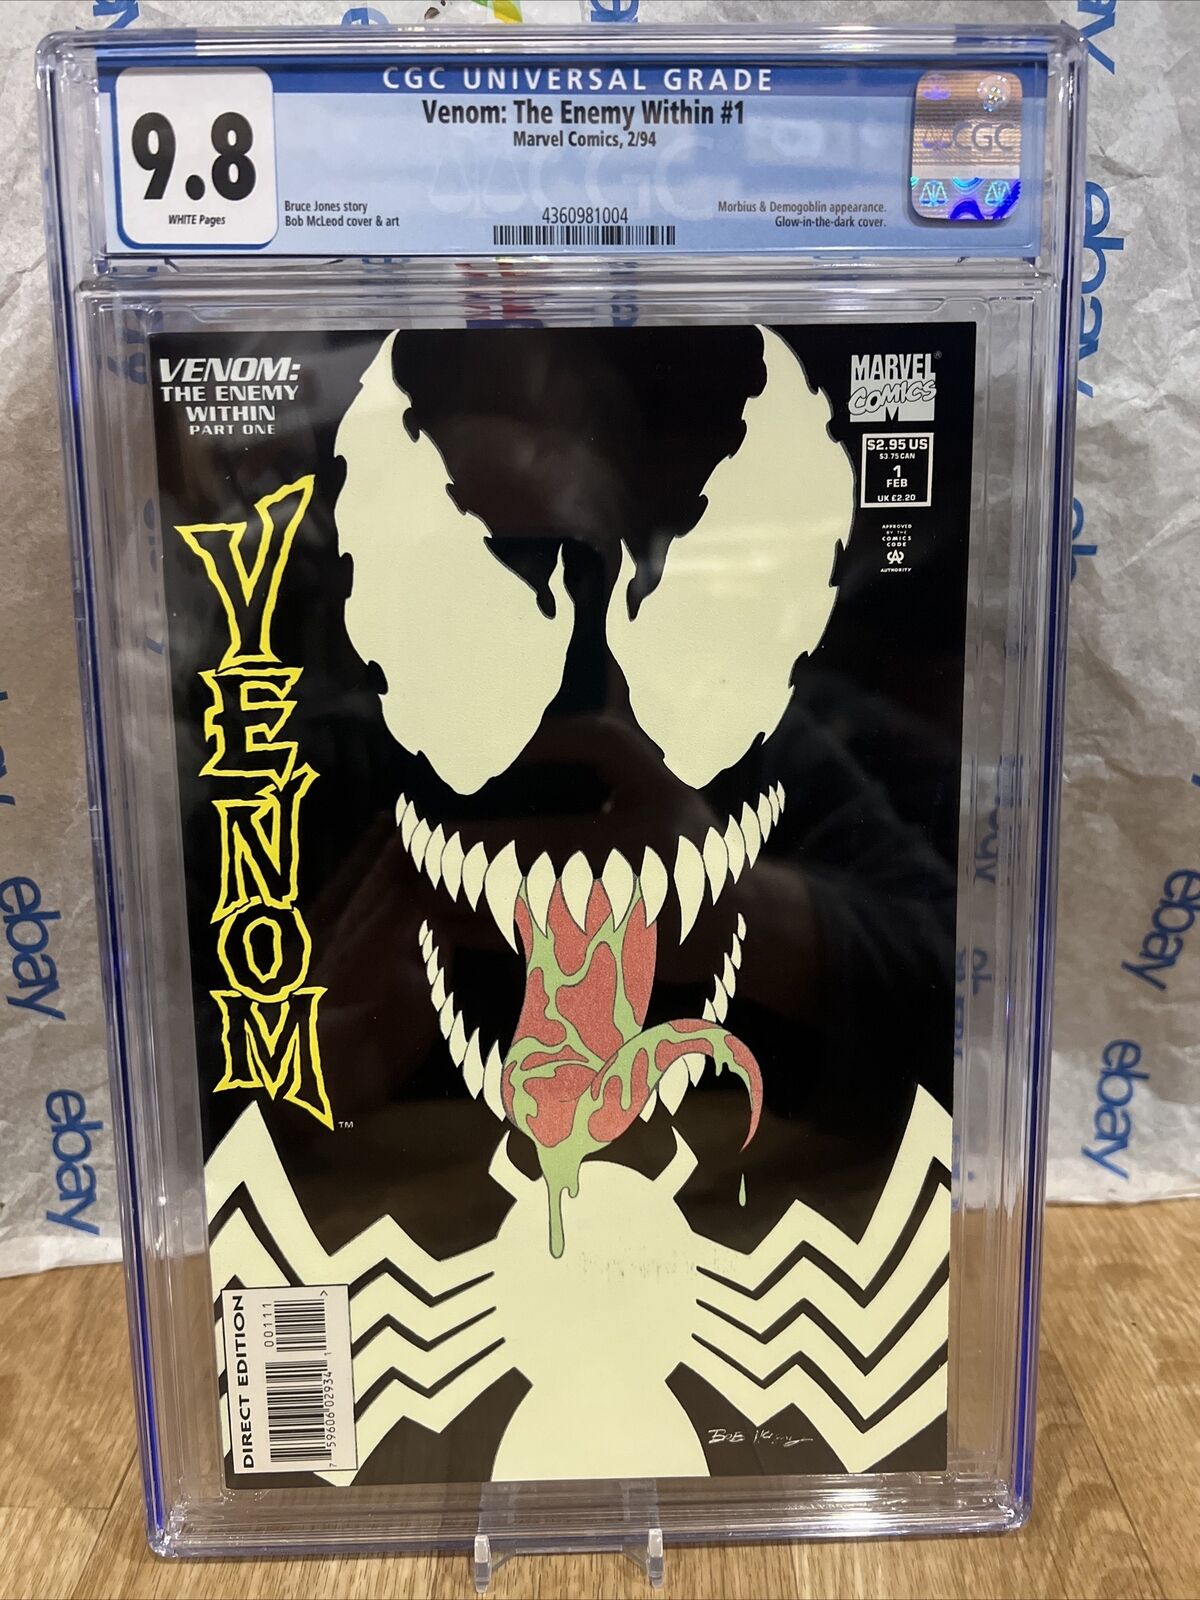 Venom The Enemy Within 1 cgc 9.8 GLOW-IN-THE-DARK cover Morbius WP NM MINT movie